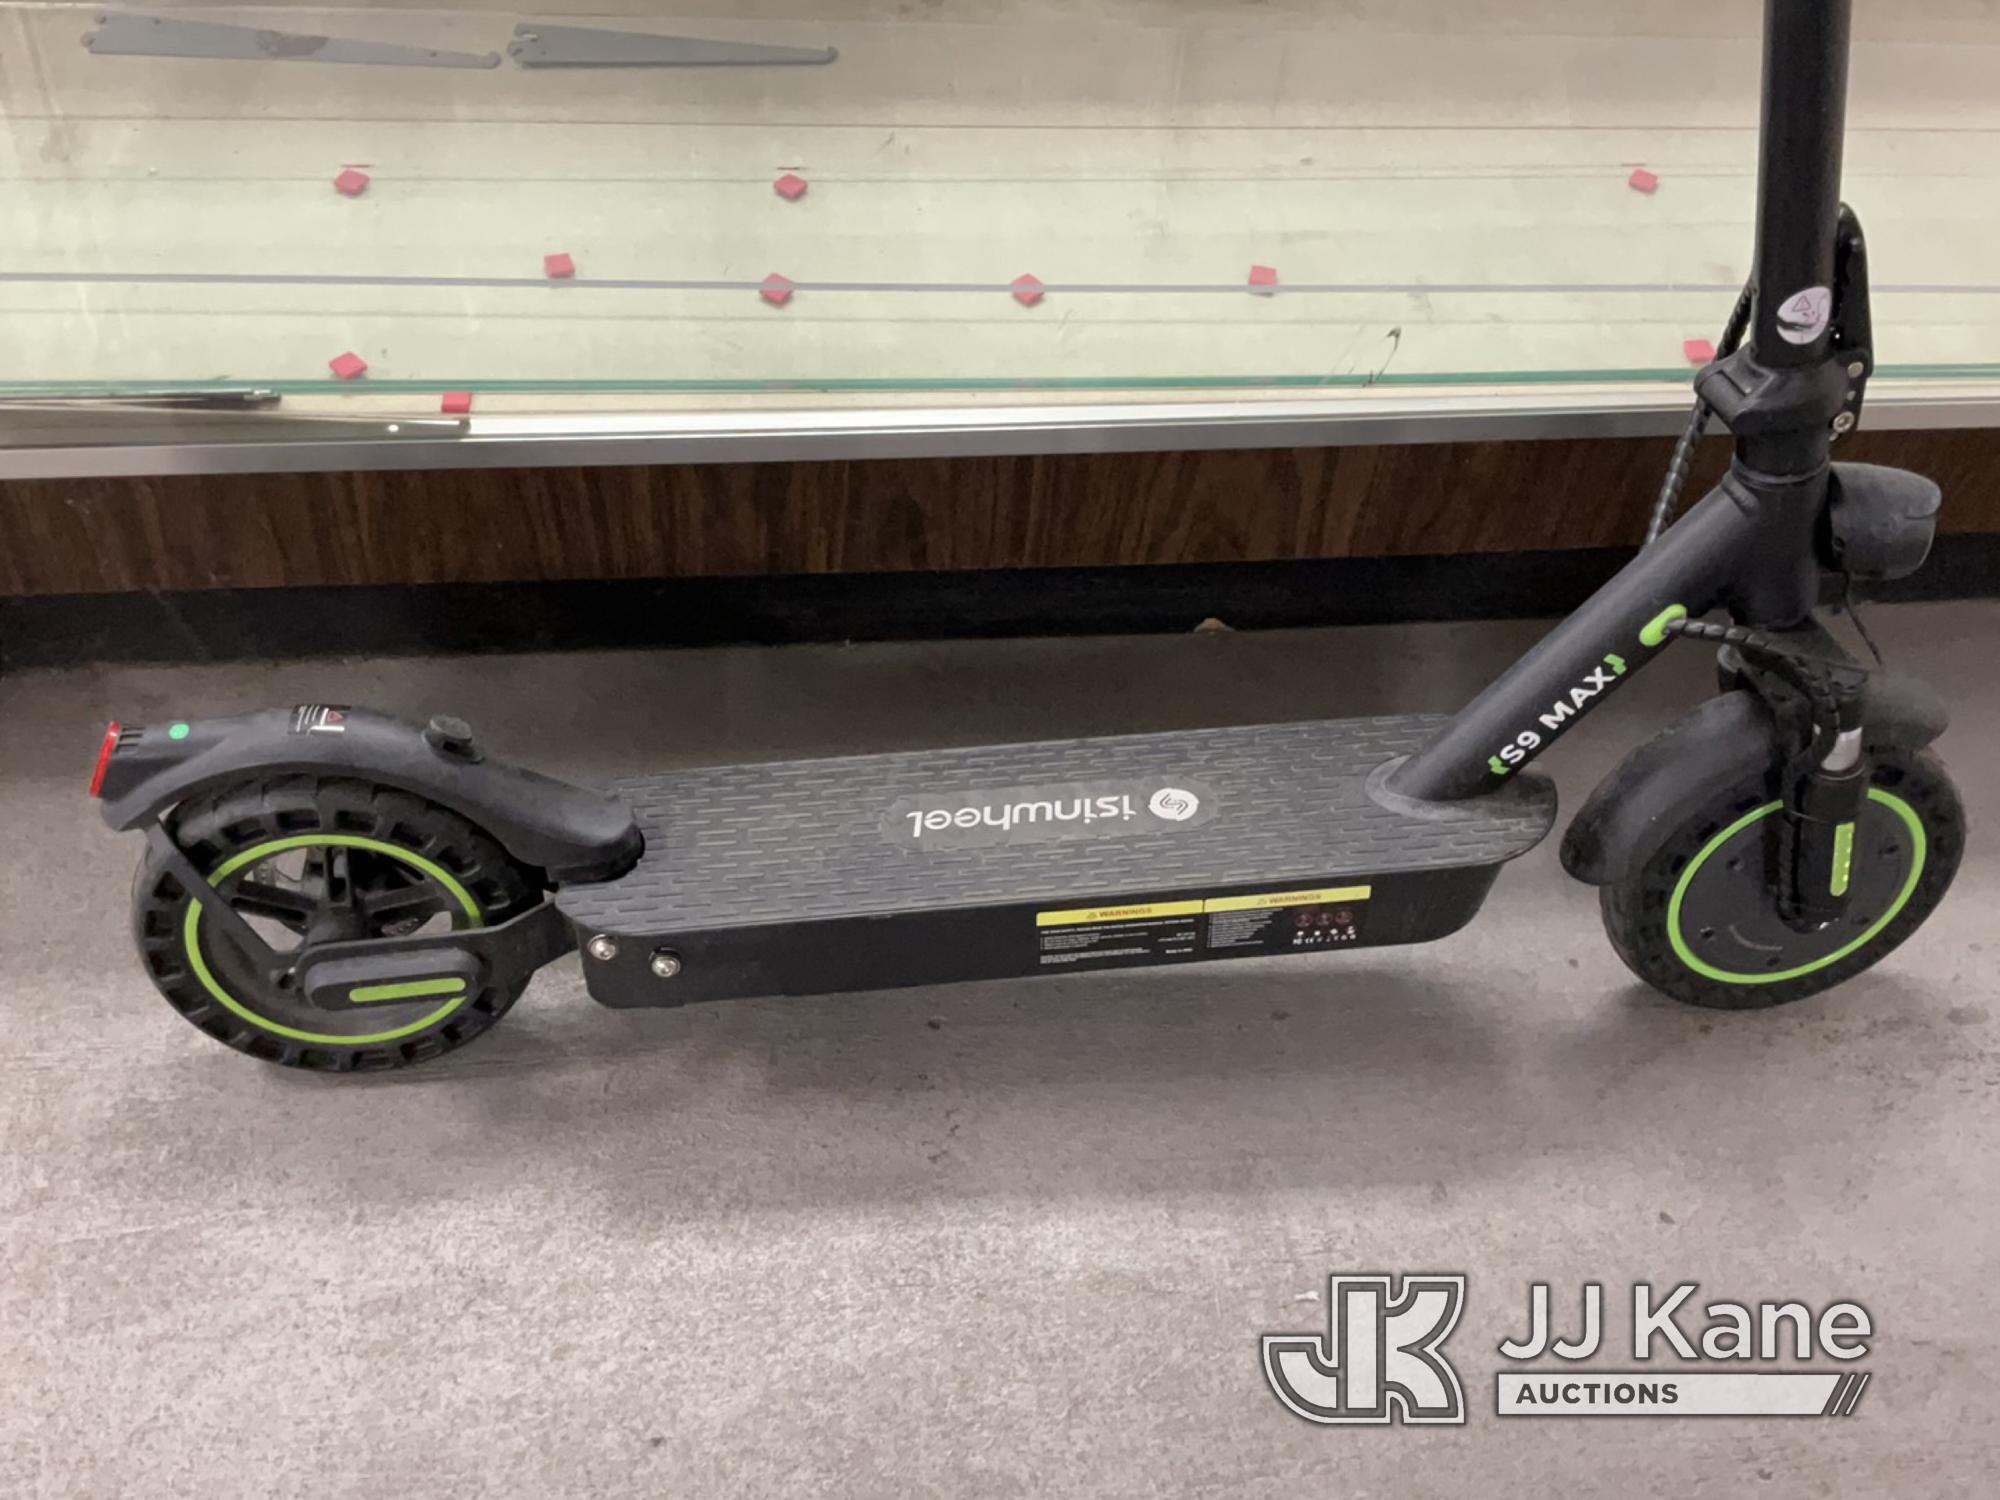 (Jurupa Valley, CA) Isinwheel escooter Used